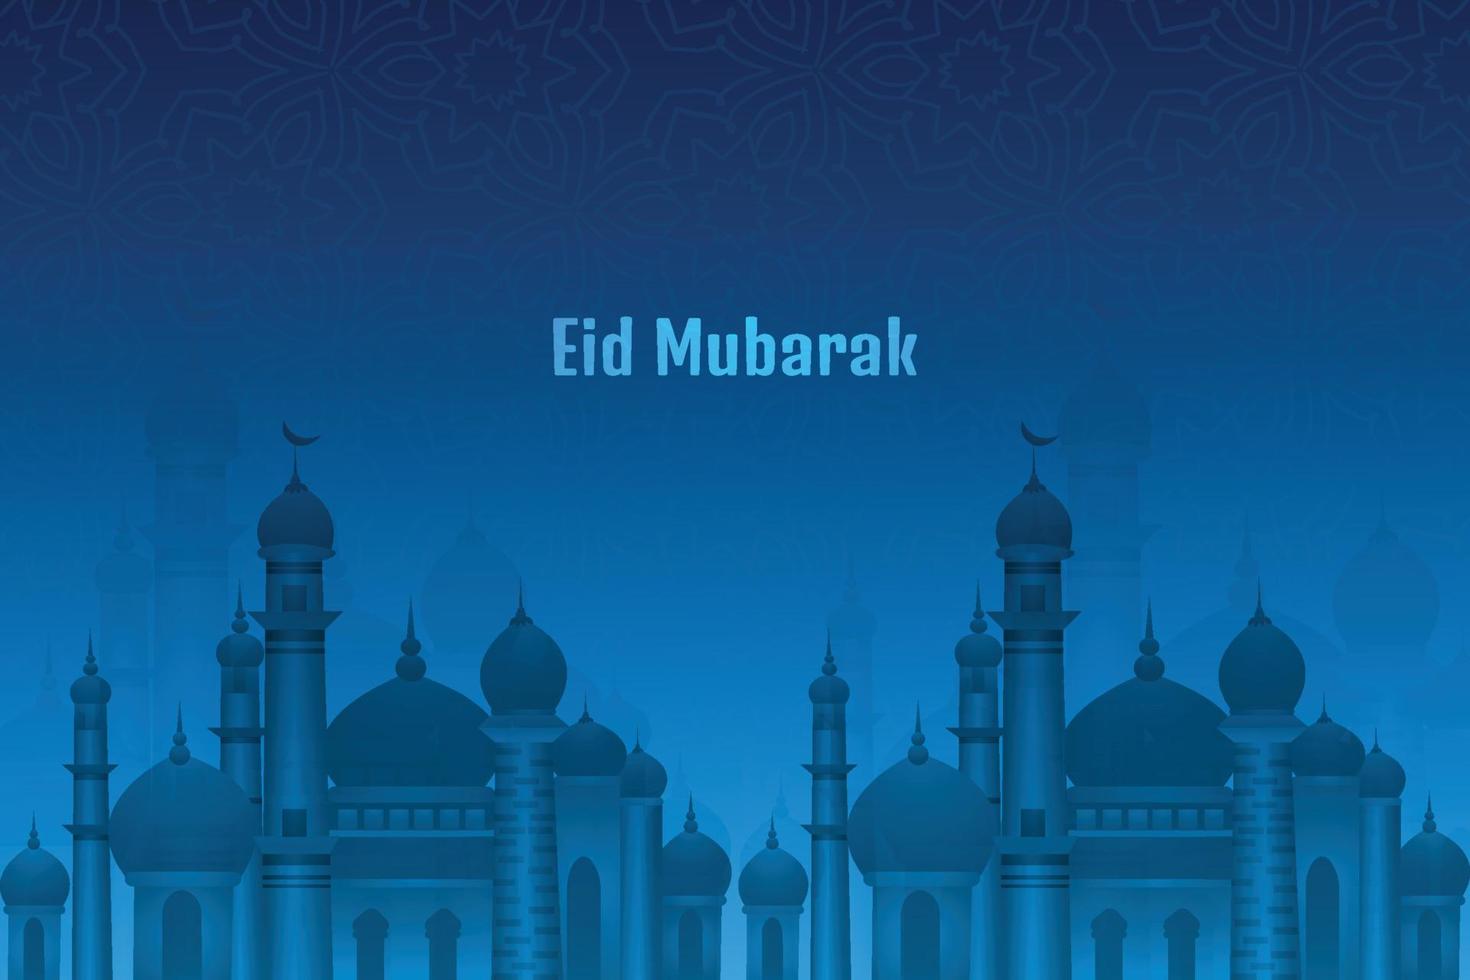 Eid mubarak muslim greeting card festival background vector